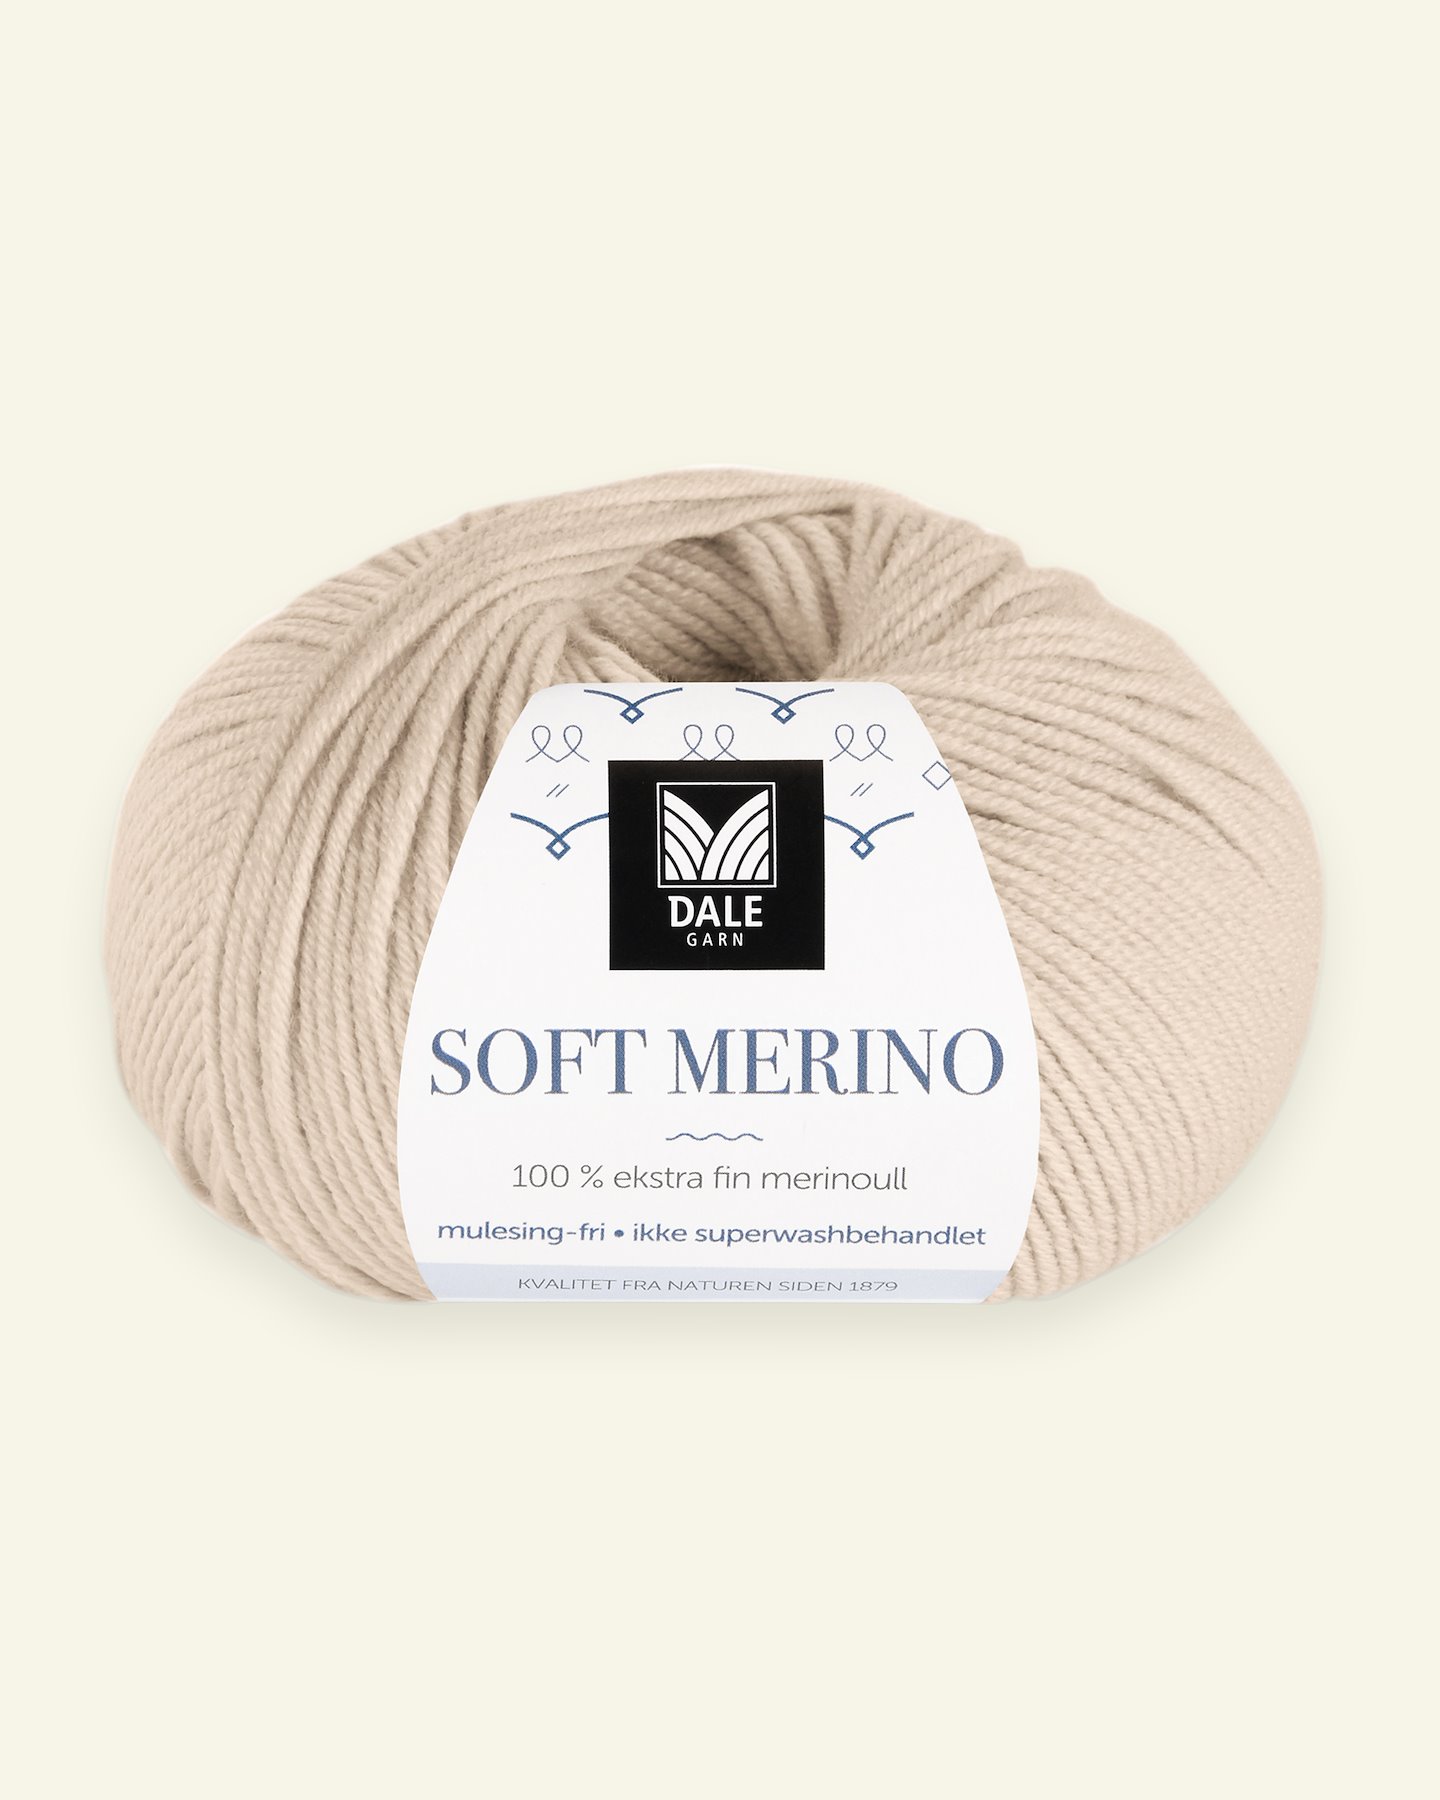 Dale Garn, 100% ekstra fint merinogarn "Soft Merino", lys sand (3037) 90000358_pack